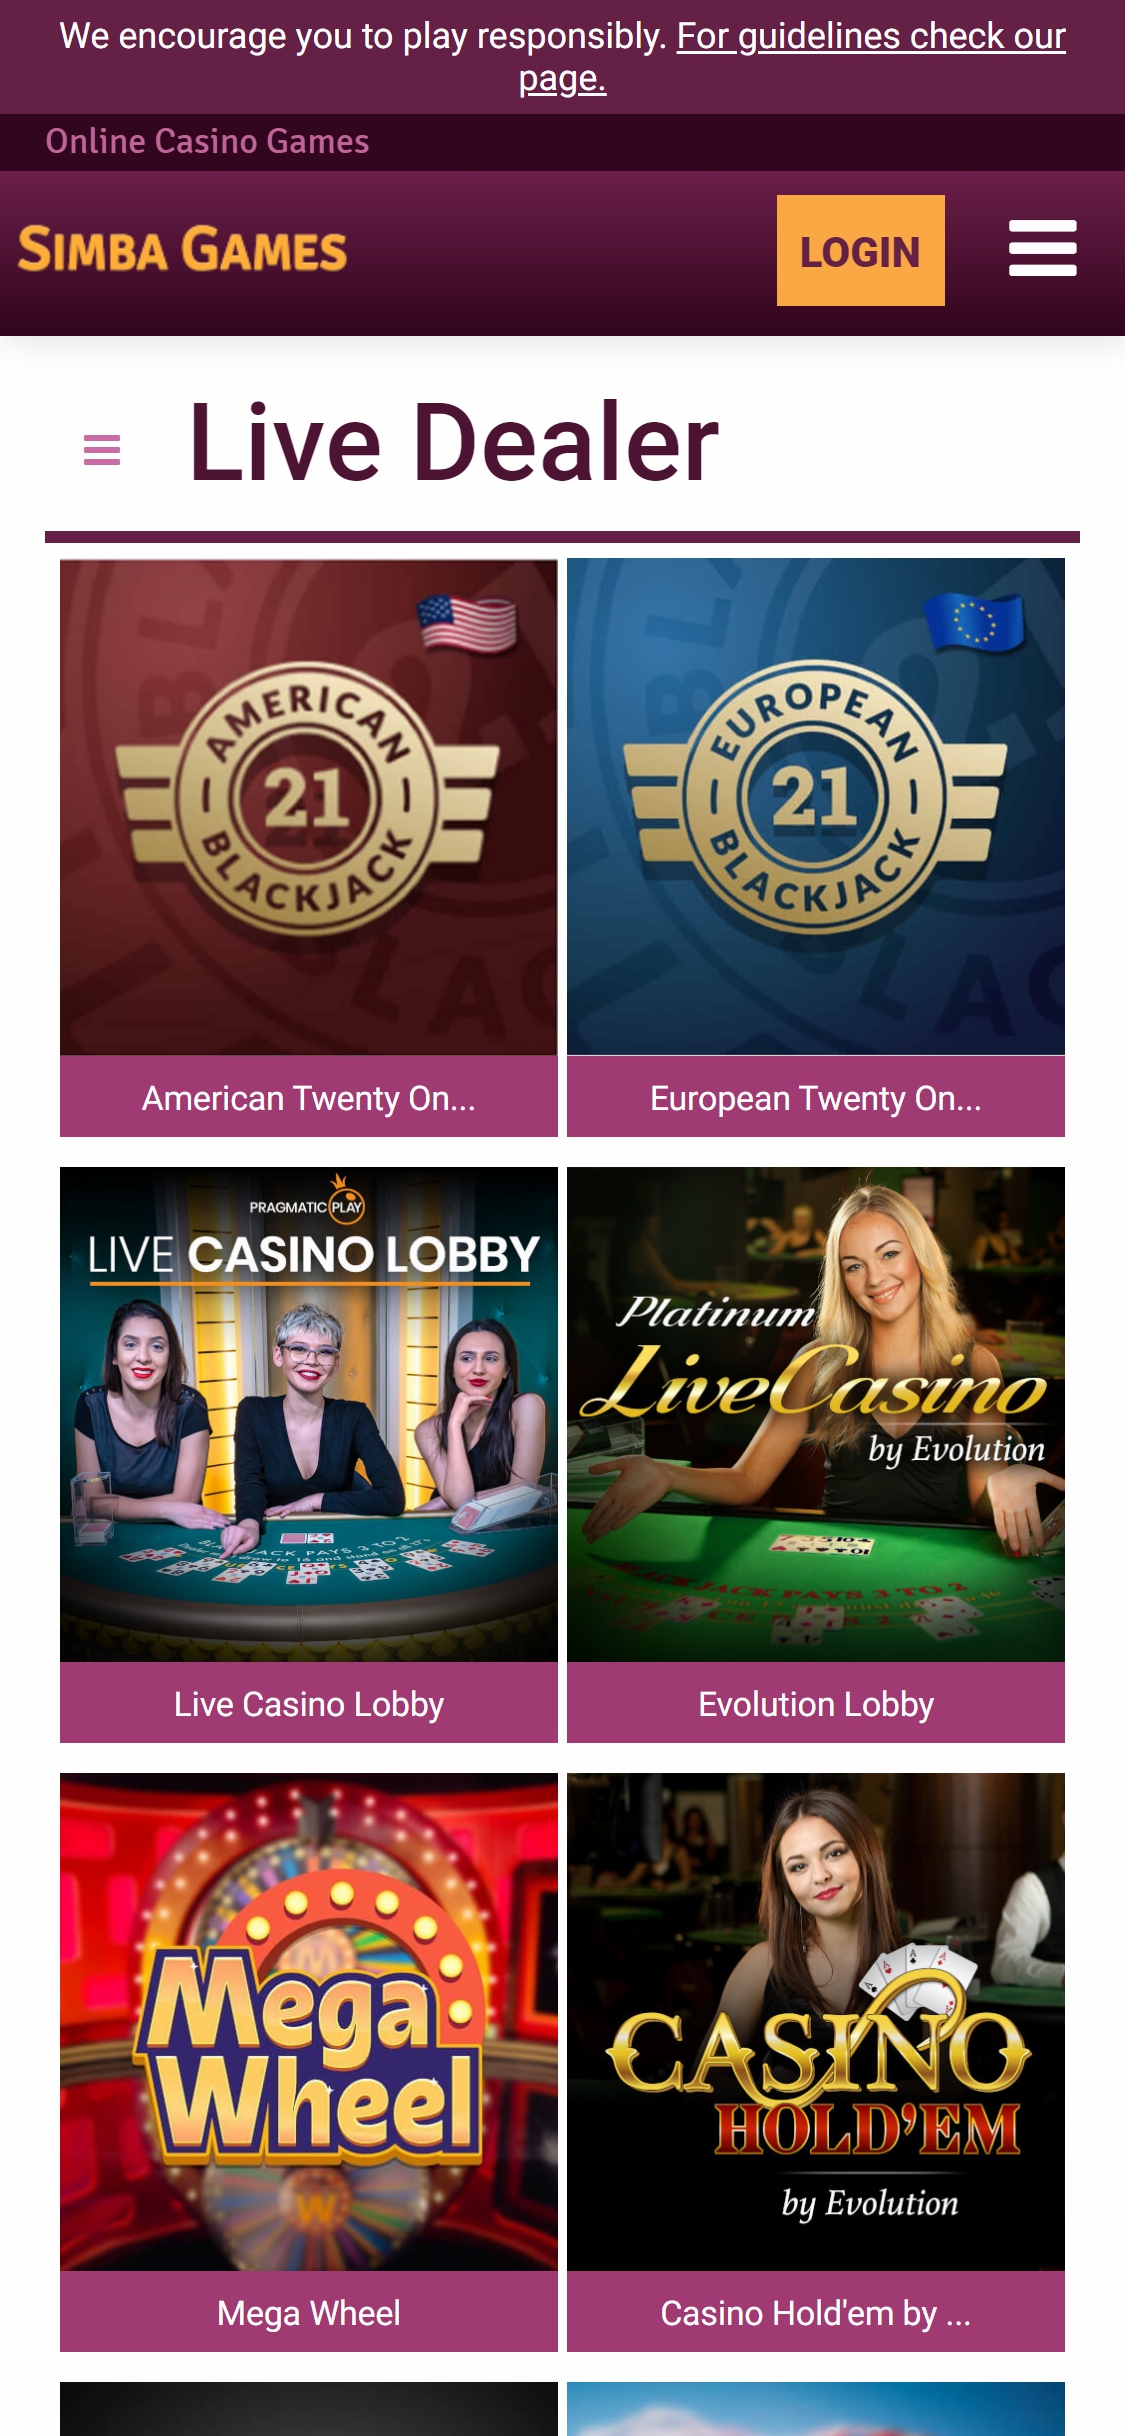 Simba Games Casino Mobile Live Dealer Games Review